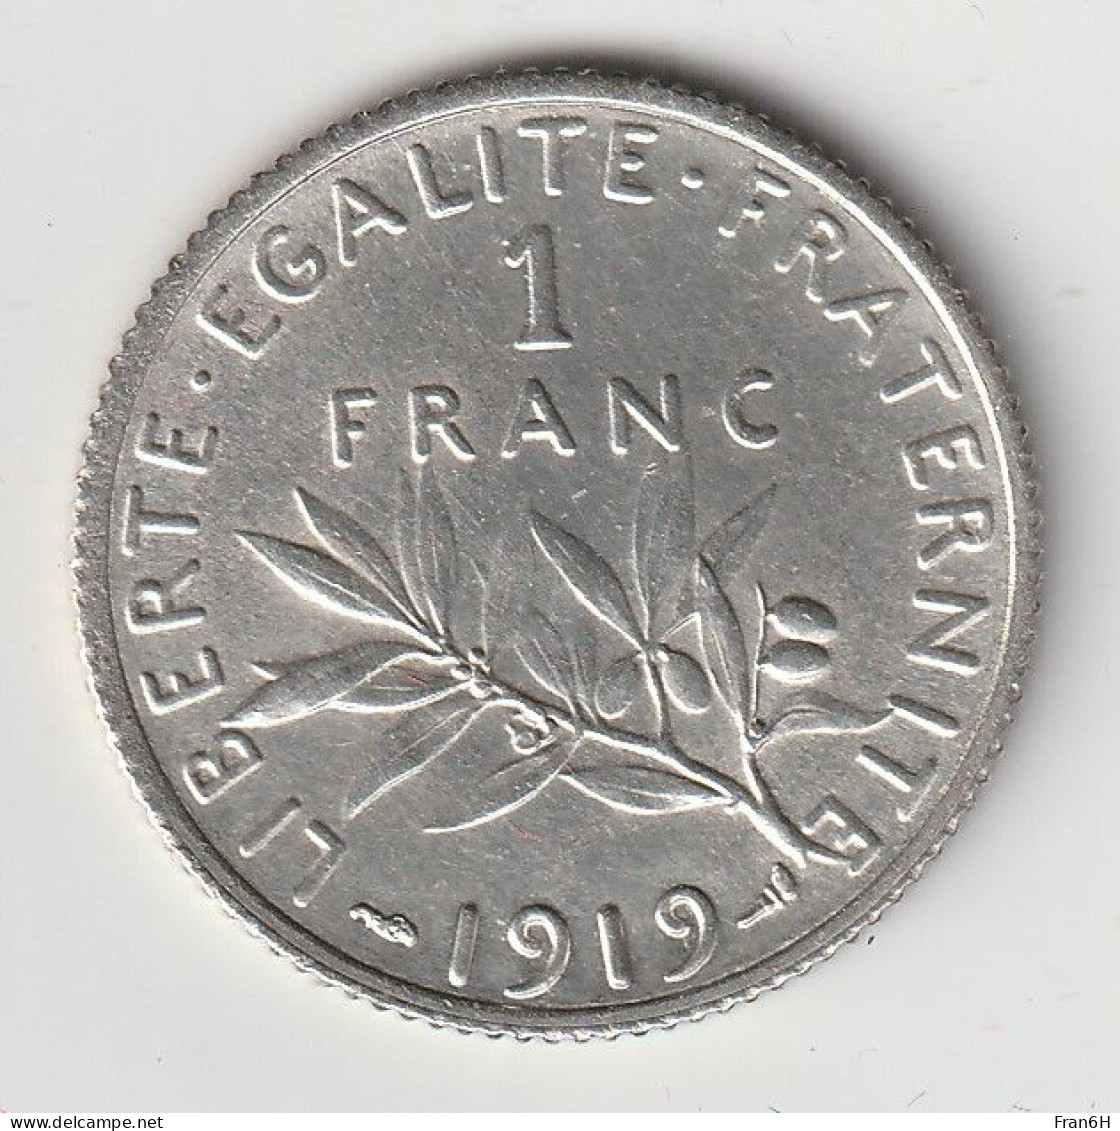 Semeuse 1 Franc Argent 1919 - Silver - - 1 Franc